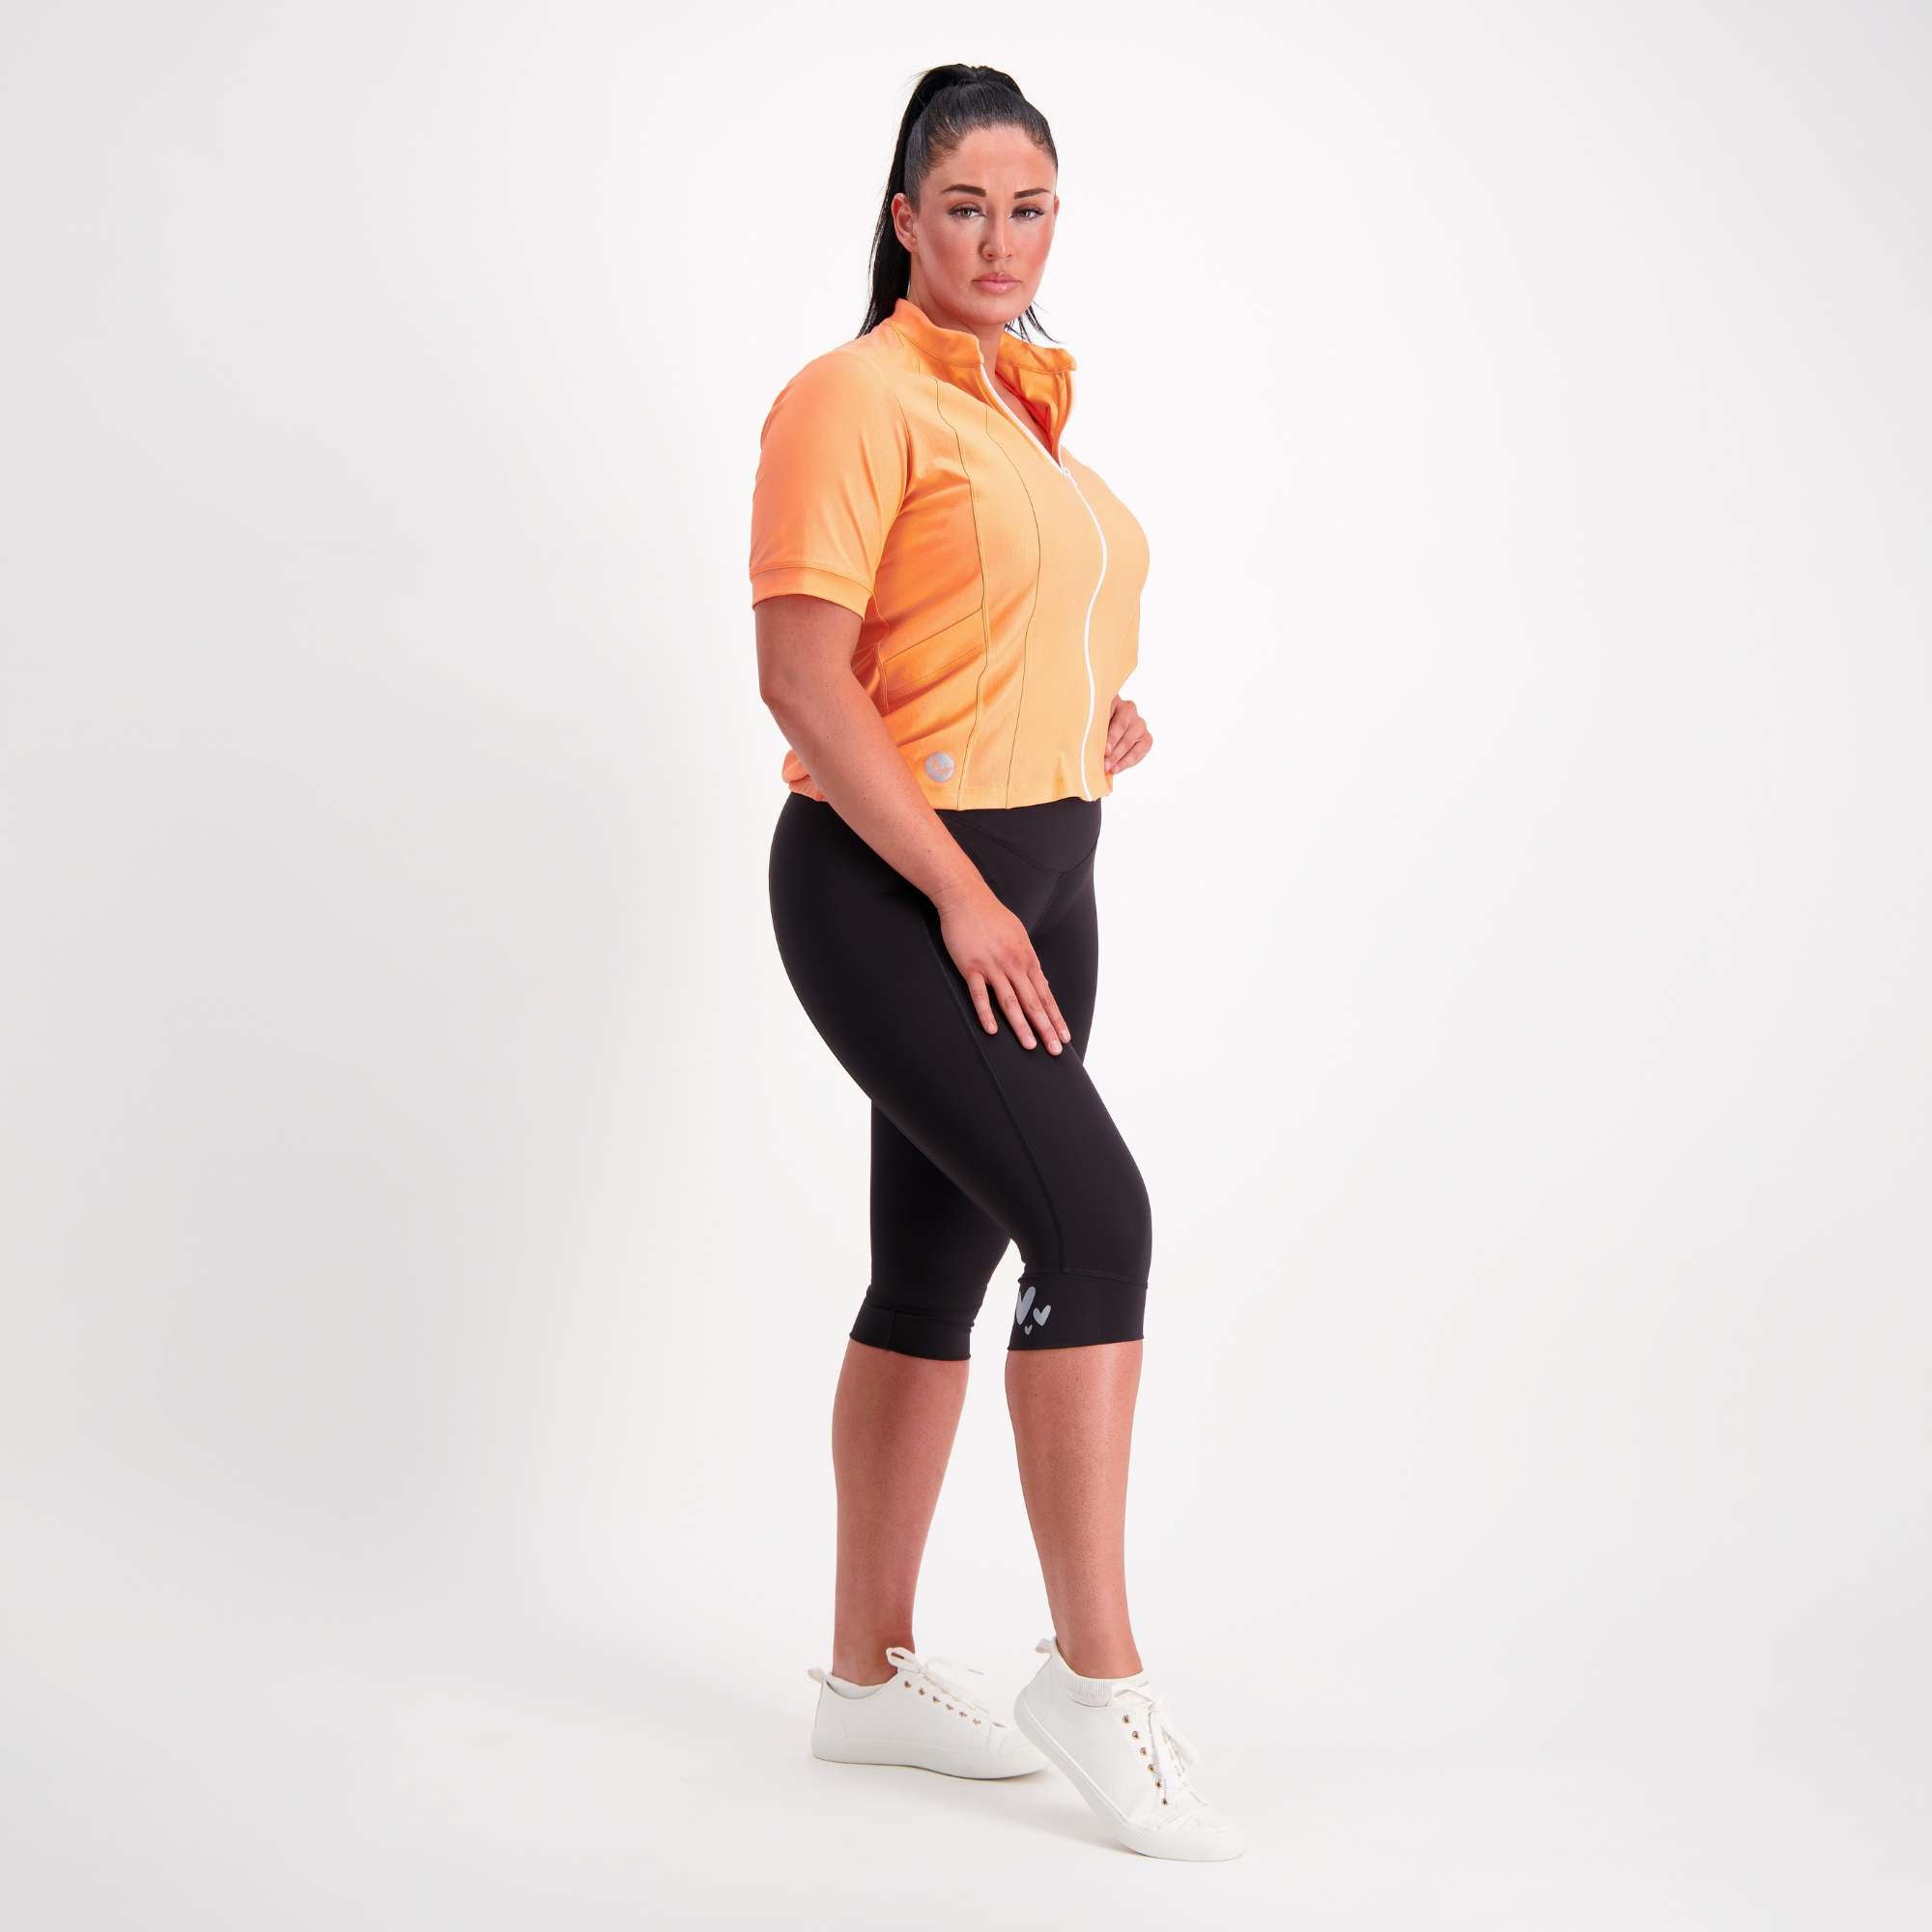 Orange short sleeve women's cycling jersey full body view on model